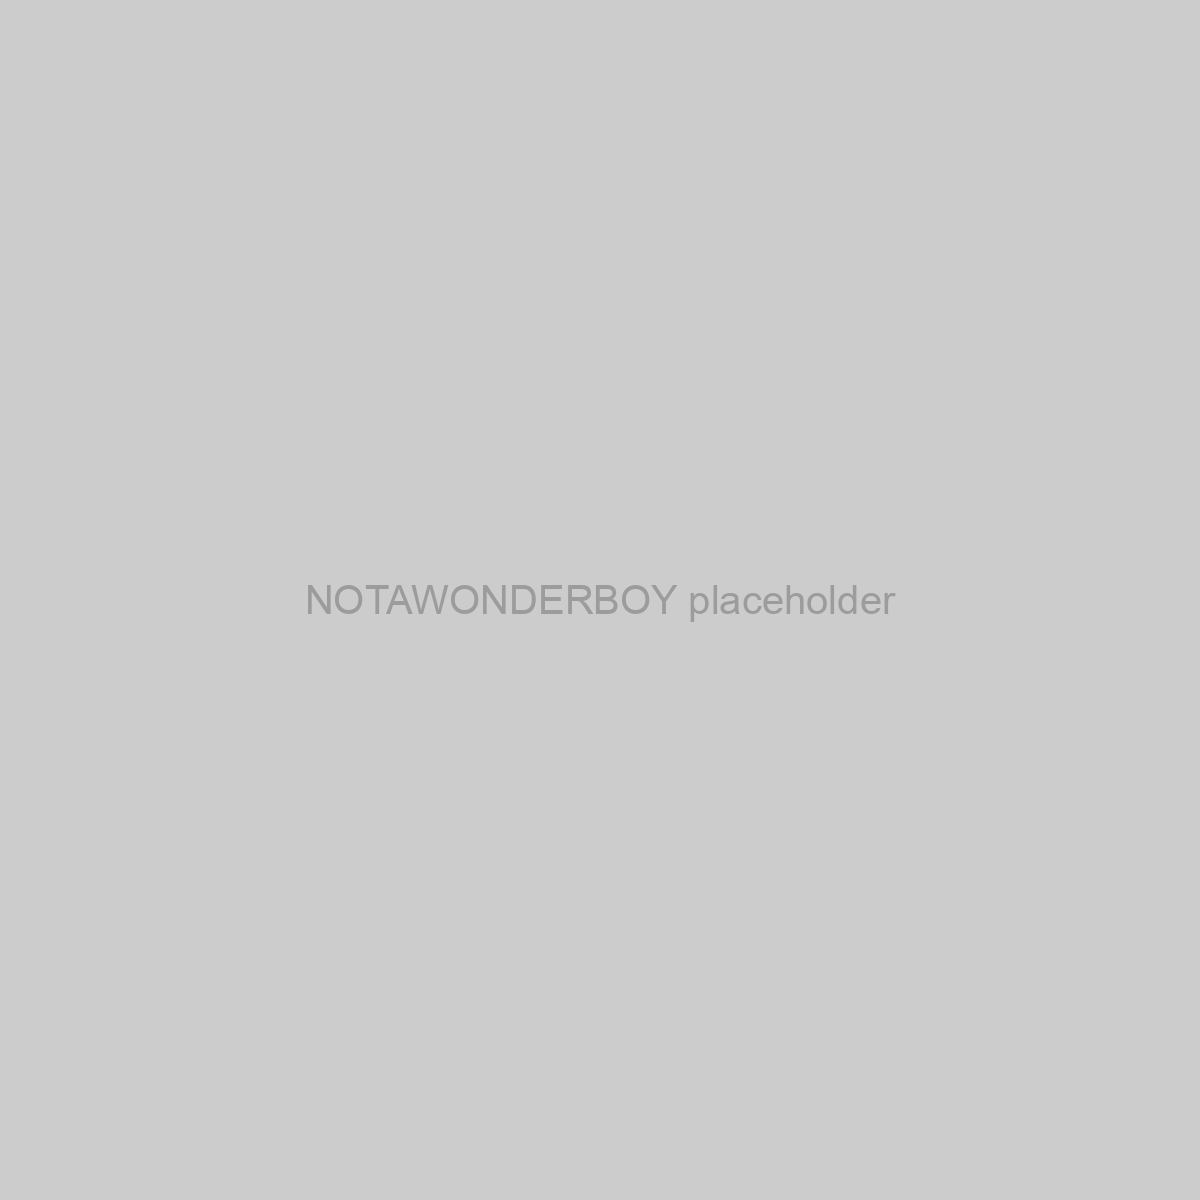 NOTAWONDERBOY Placeholder Image